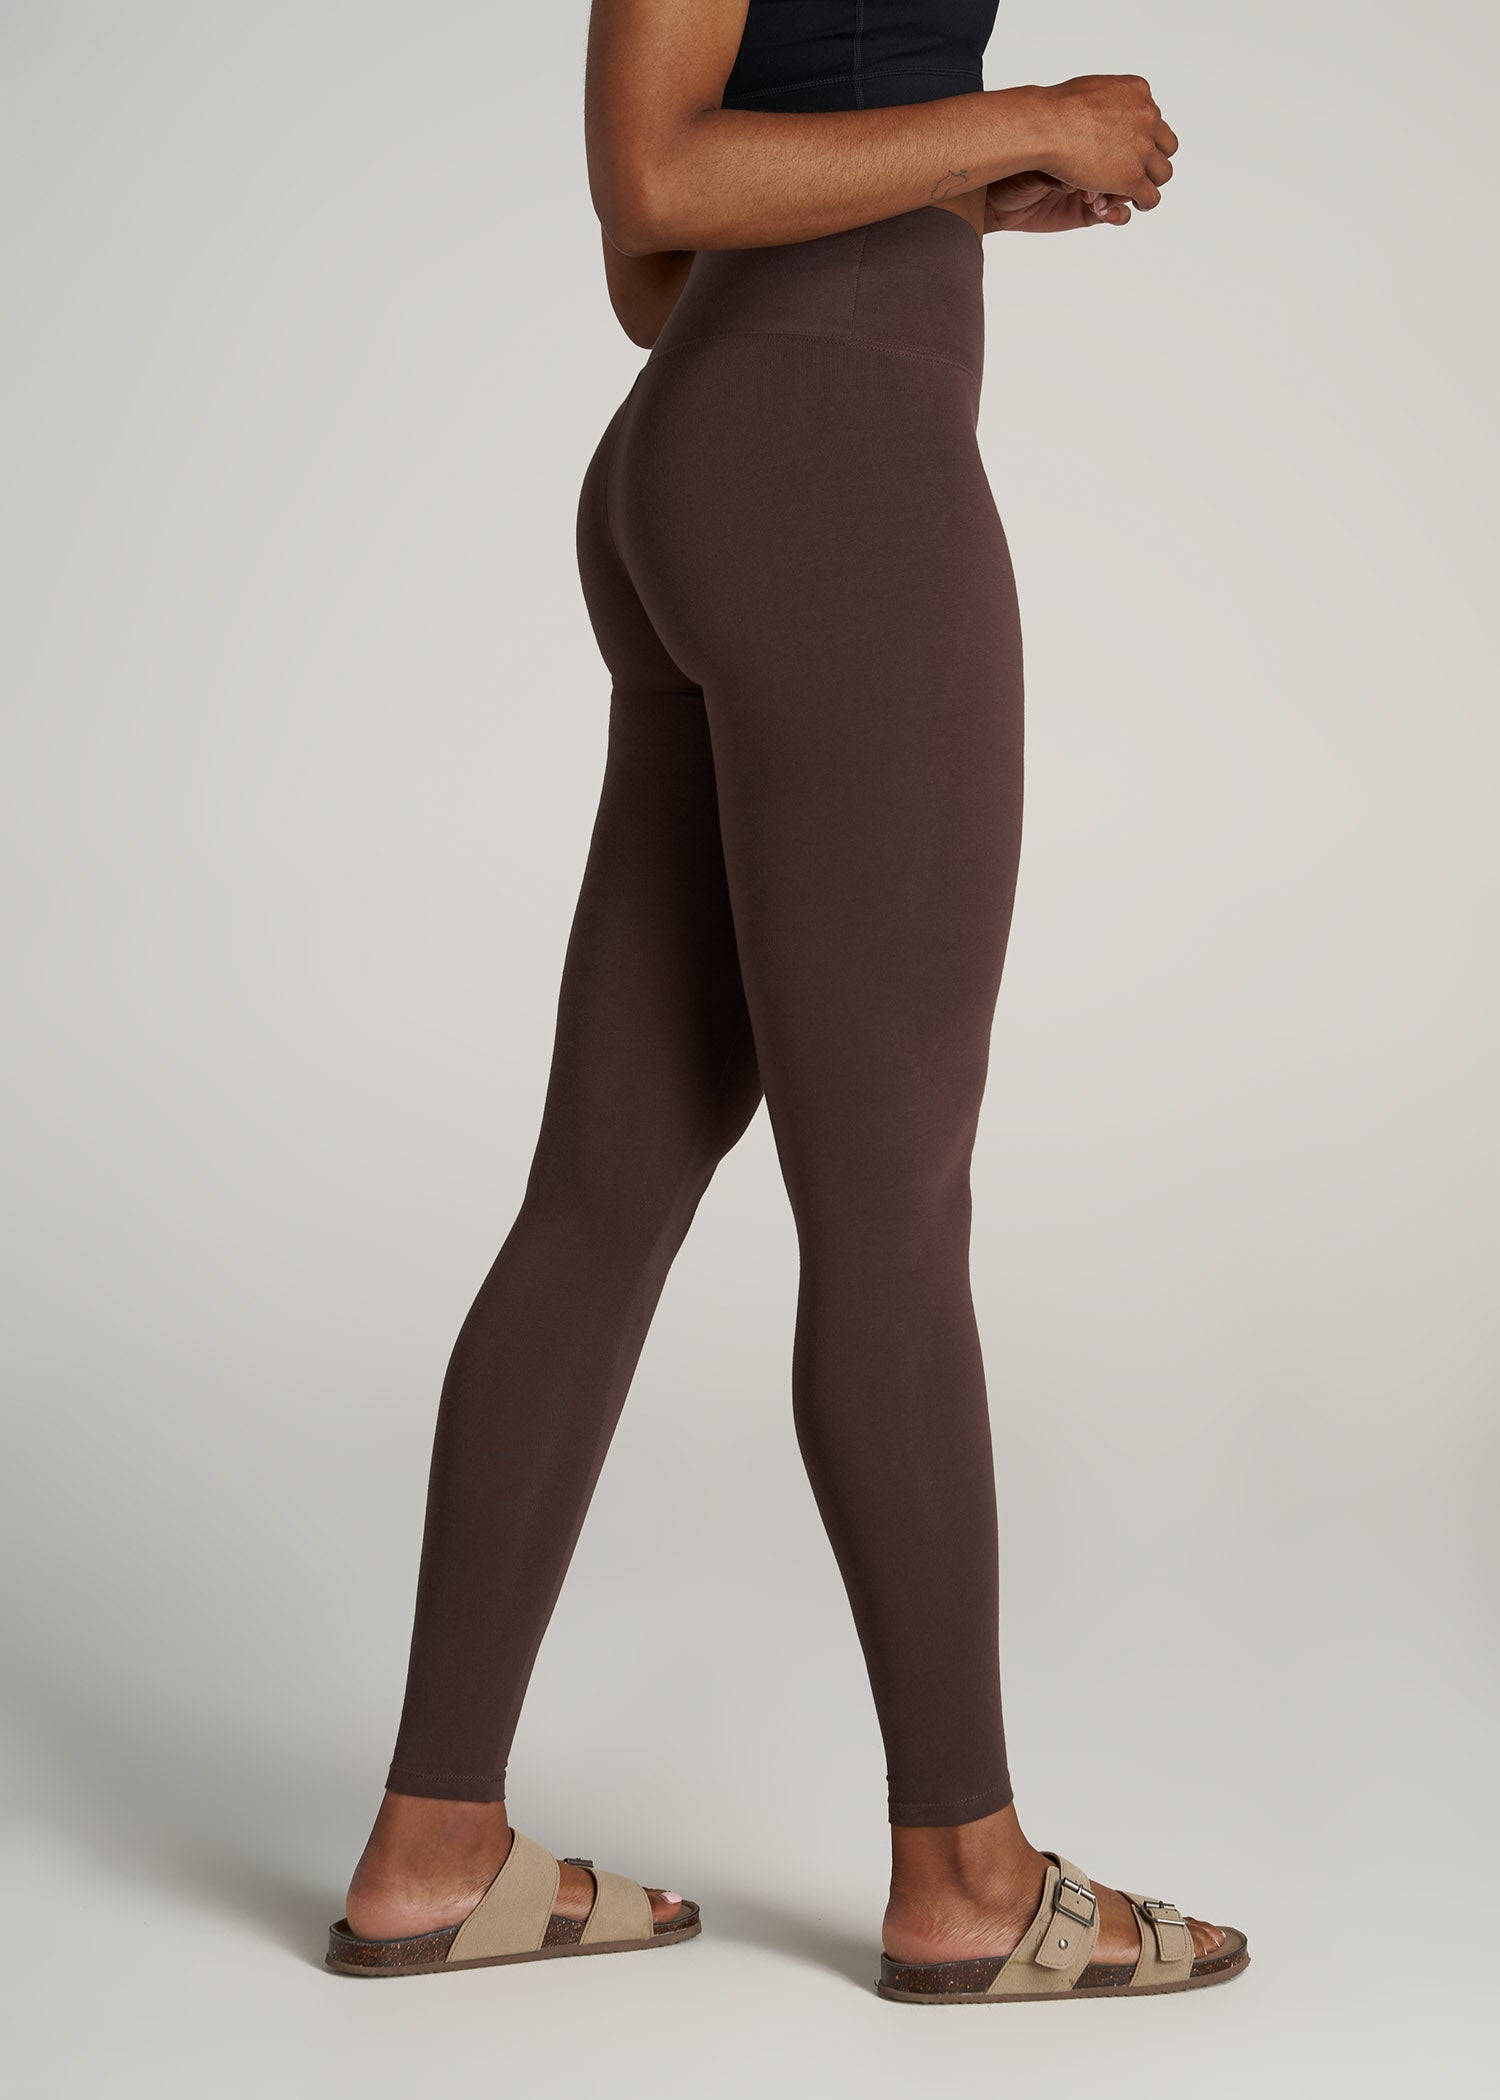 Buy Vetements Girl's Cotton Solid Ankle Legging Color Dark Brown